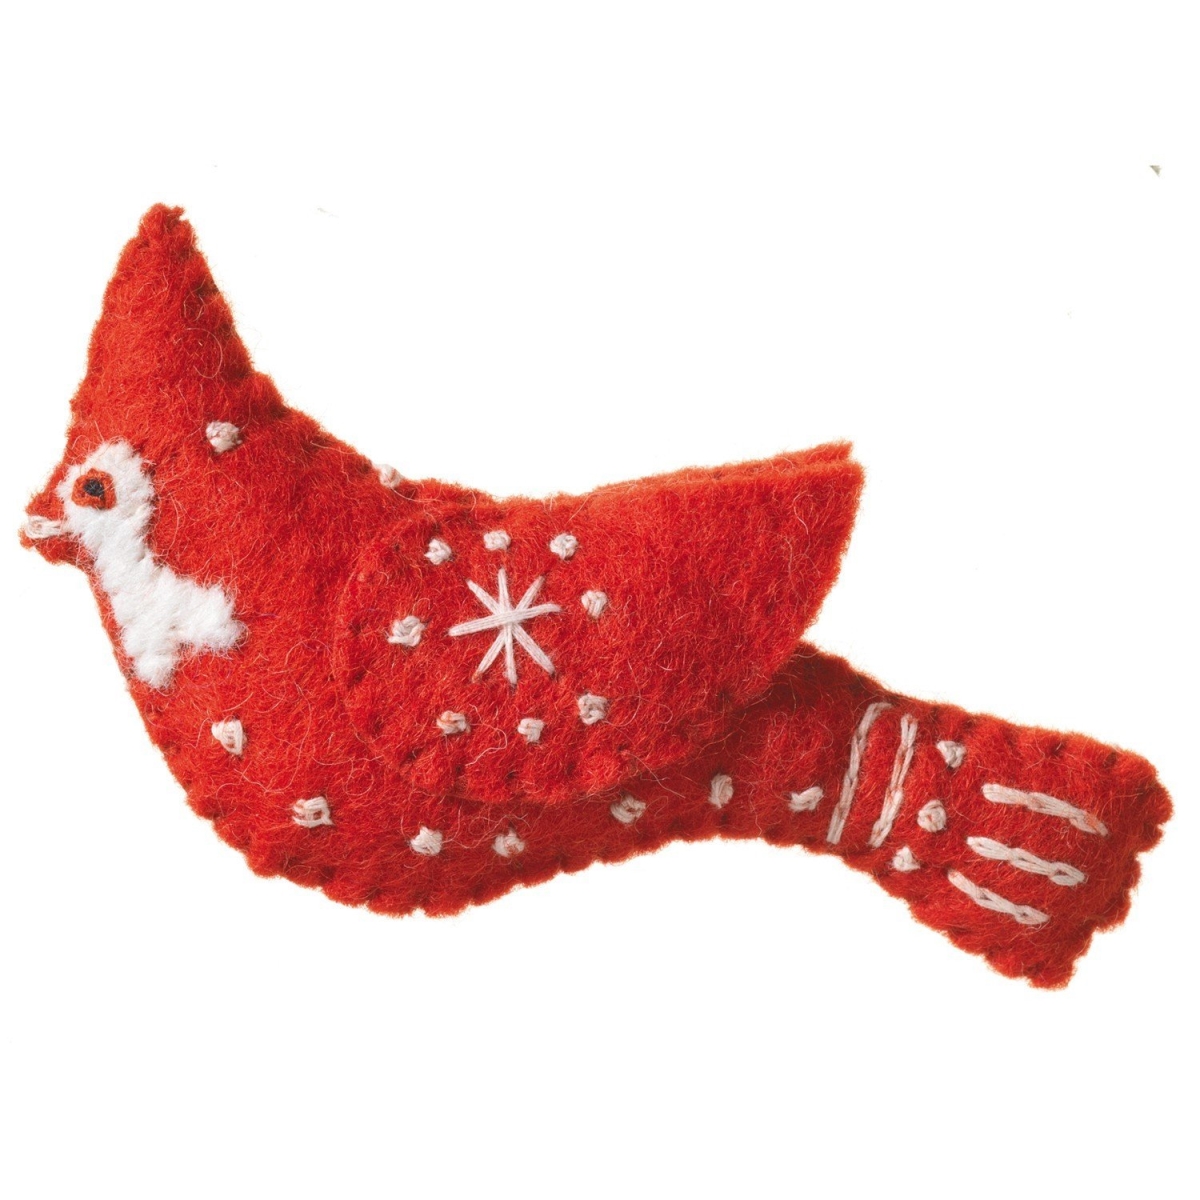 Dzi471083040 Handmade & Fair Trade Red Cardinal Felt Ornament